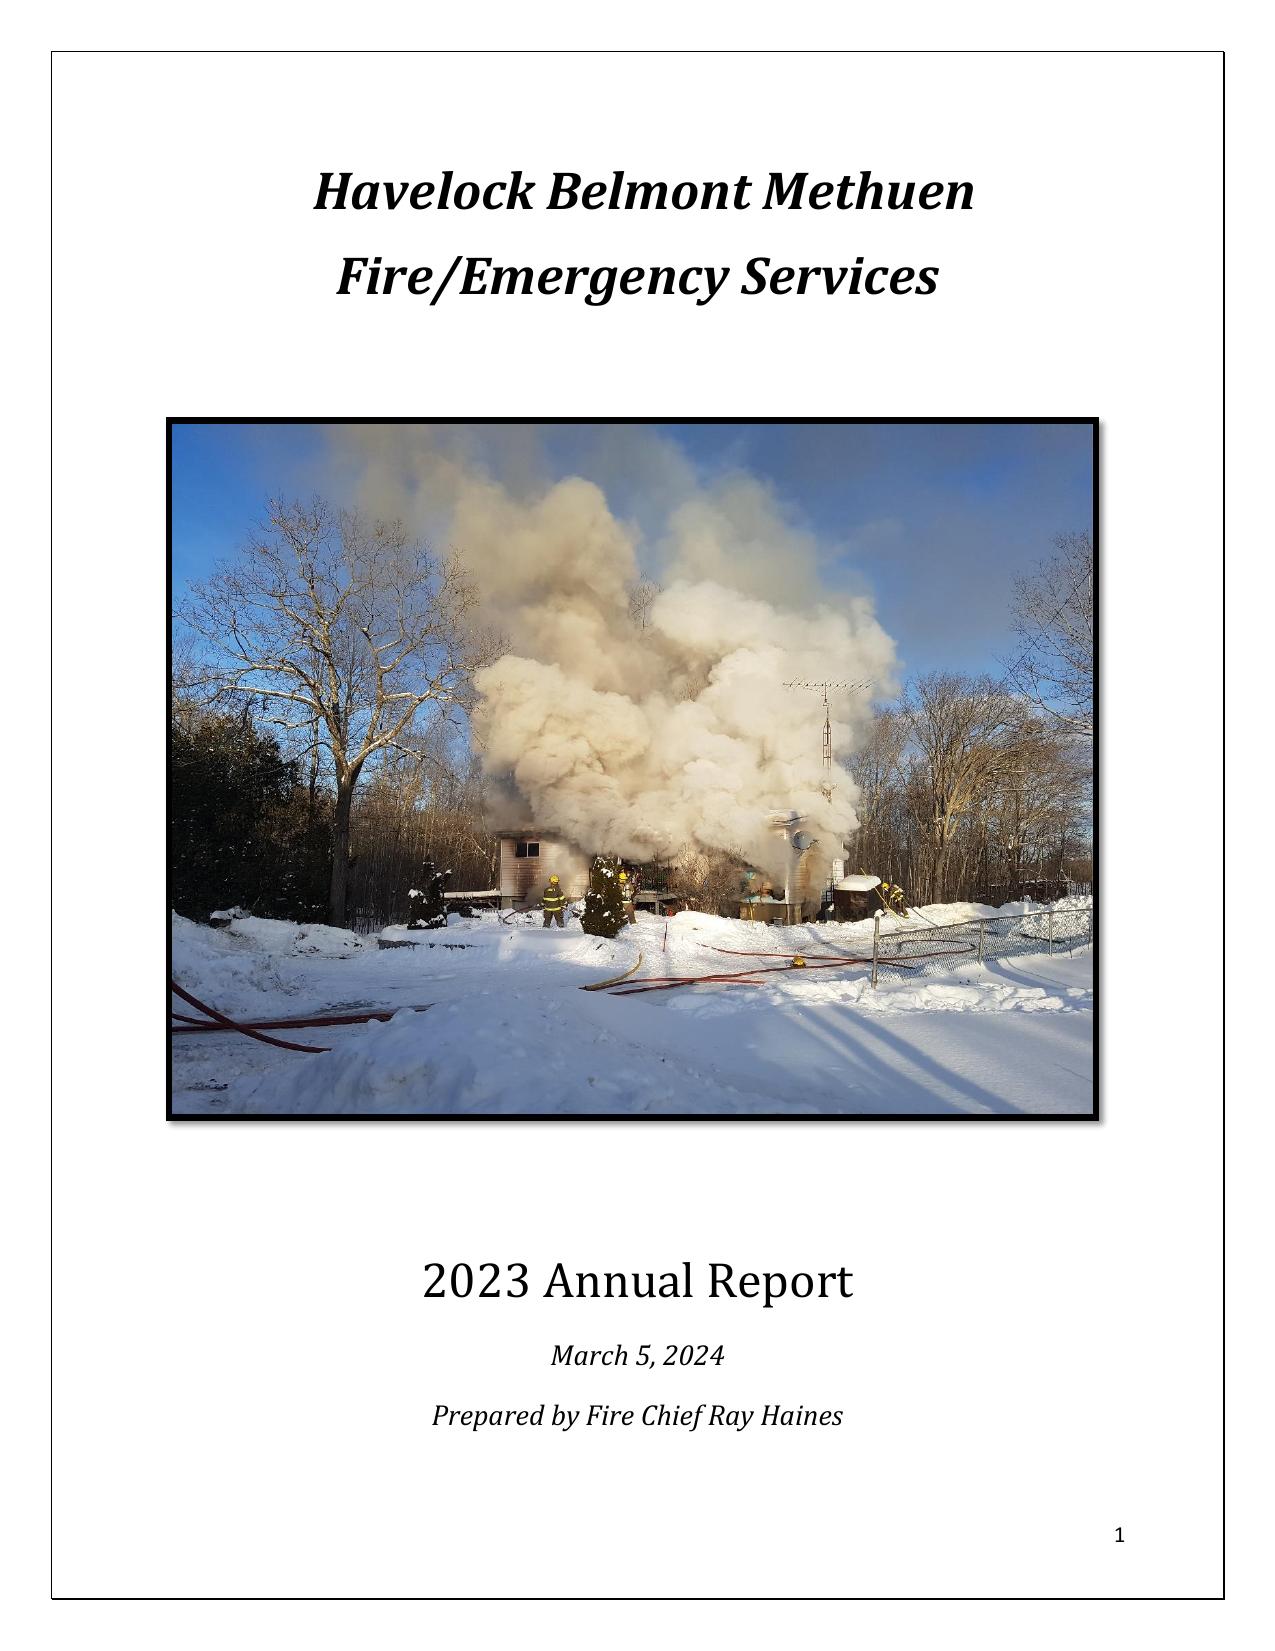 FRANCHISEDIRECT Annual Report